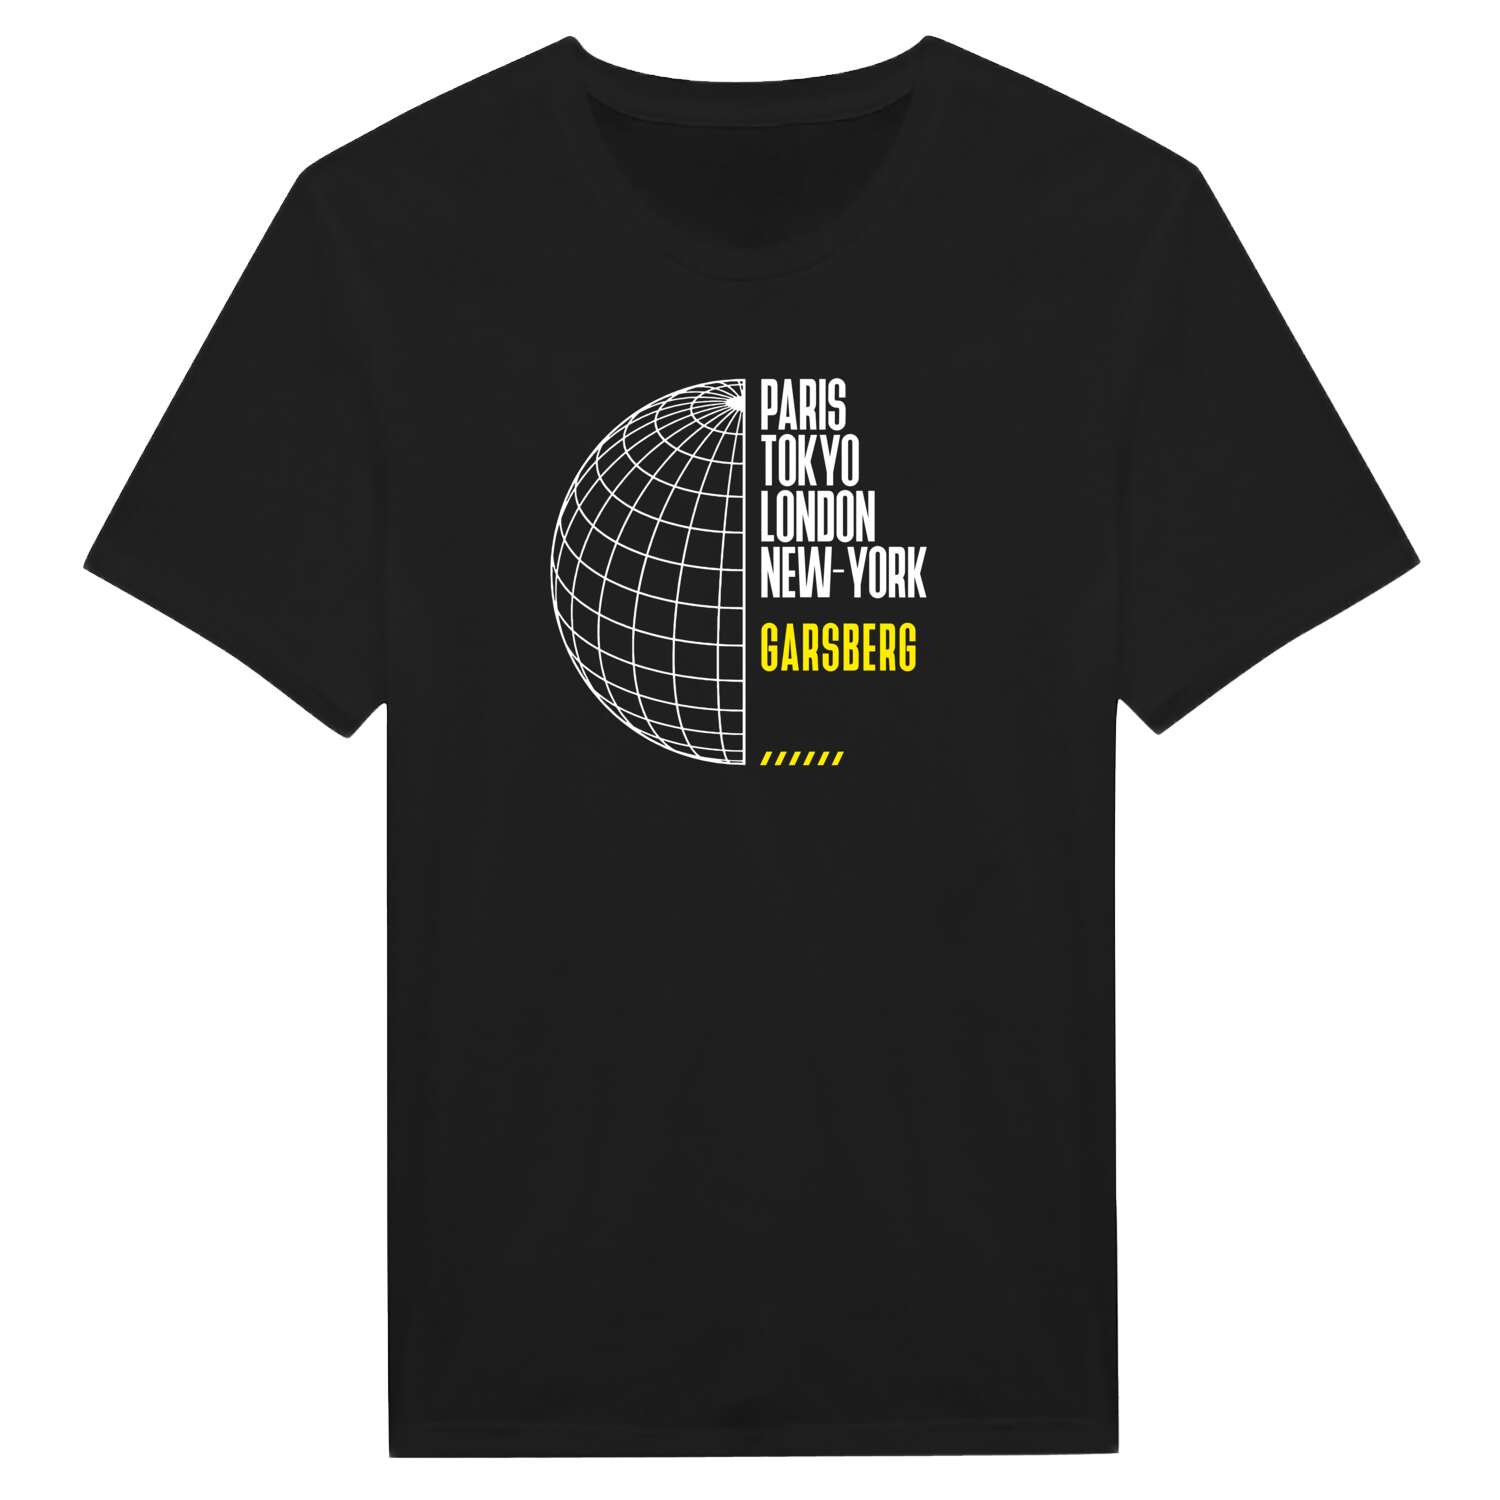 Garsberg T-Shirt »Paris Tokyo London«